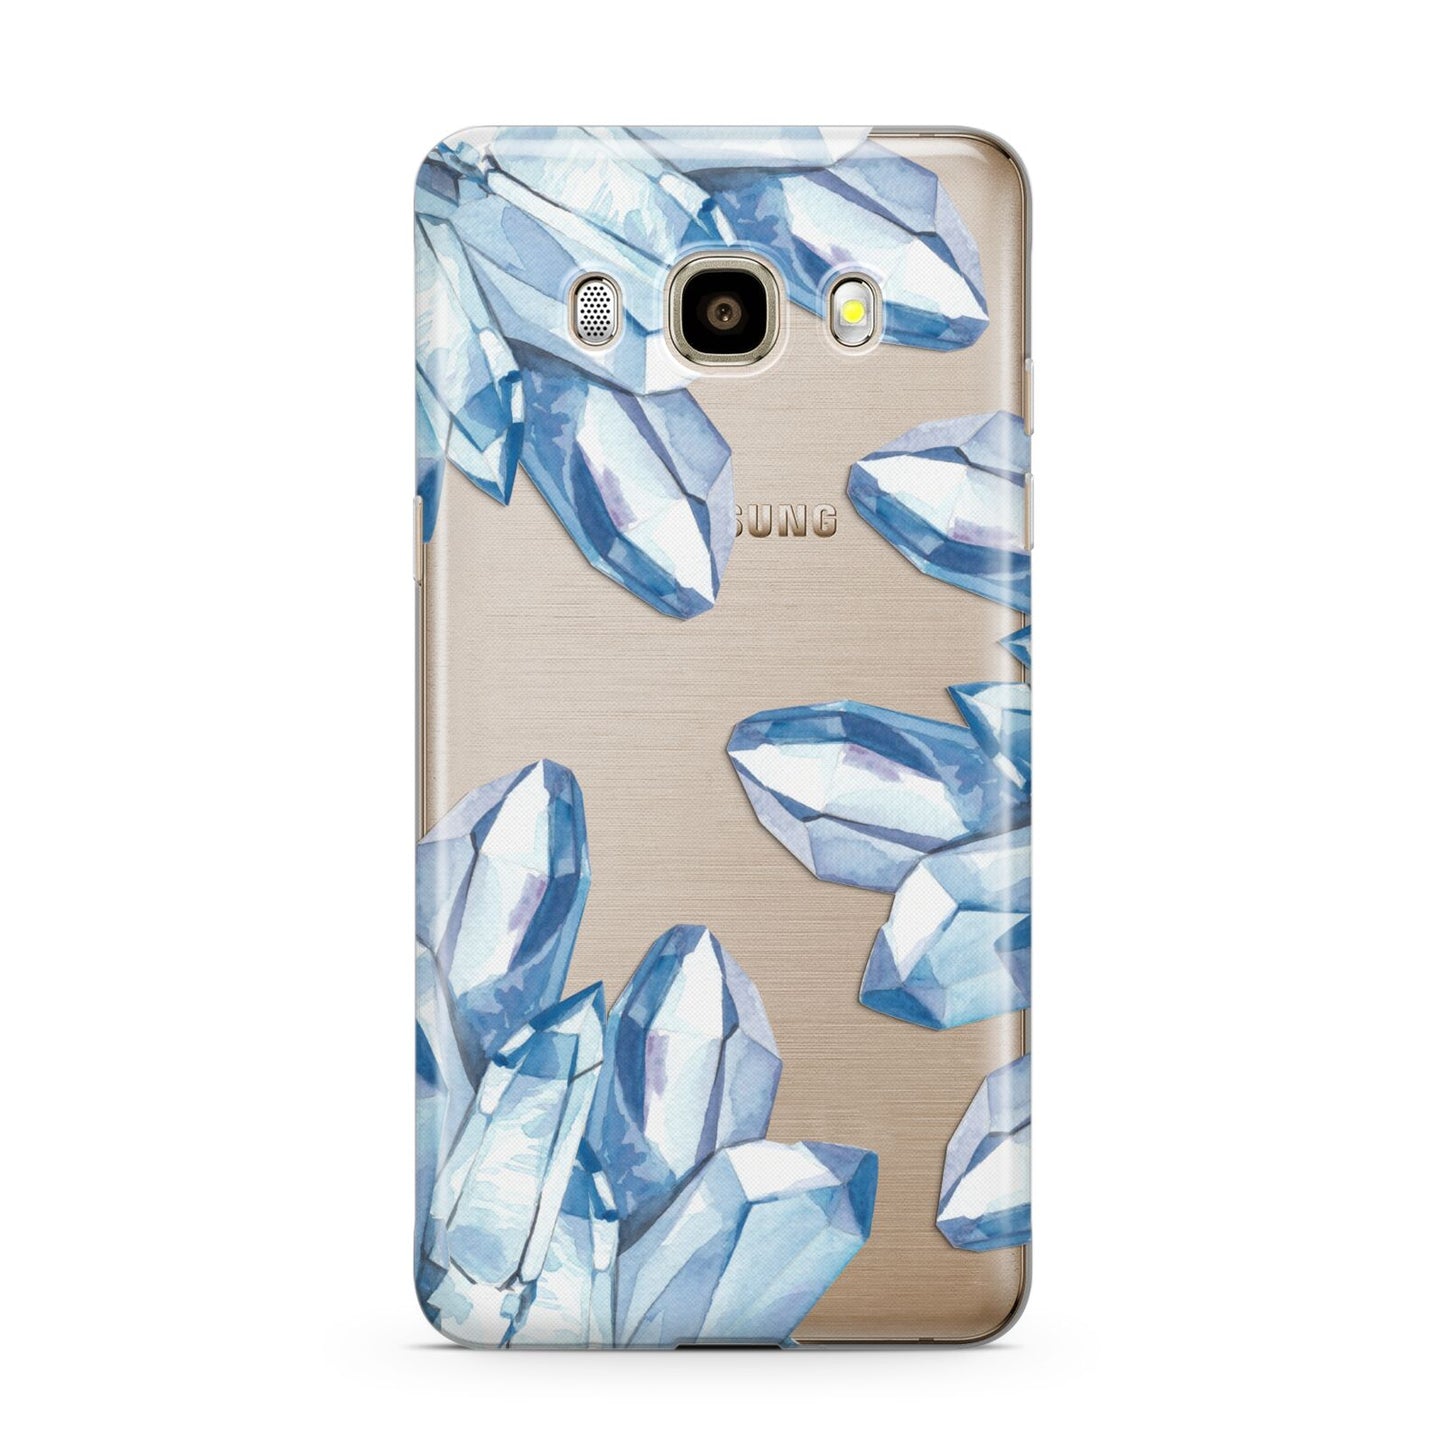 Blue Crystals Samsung Galaxy J7 2016 Case on gold phone